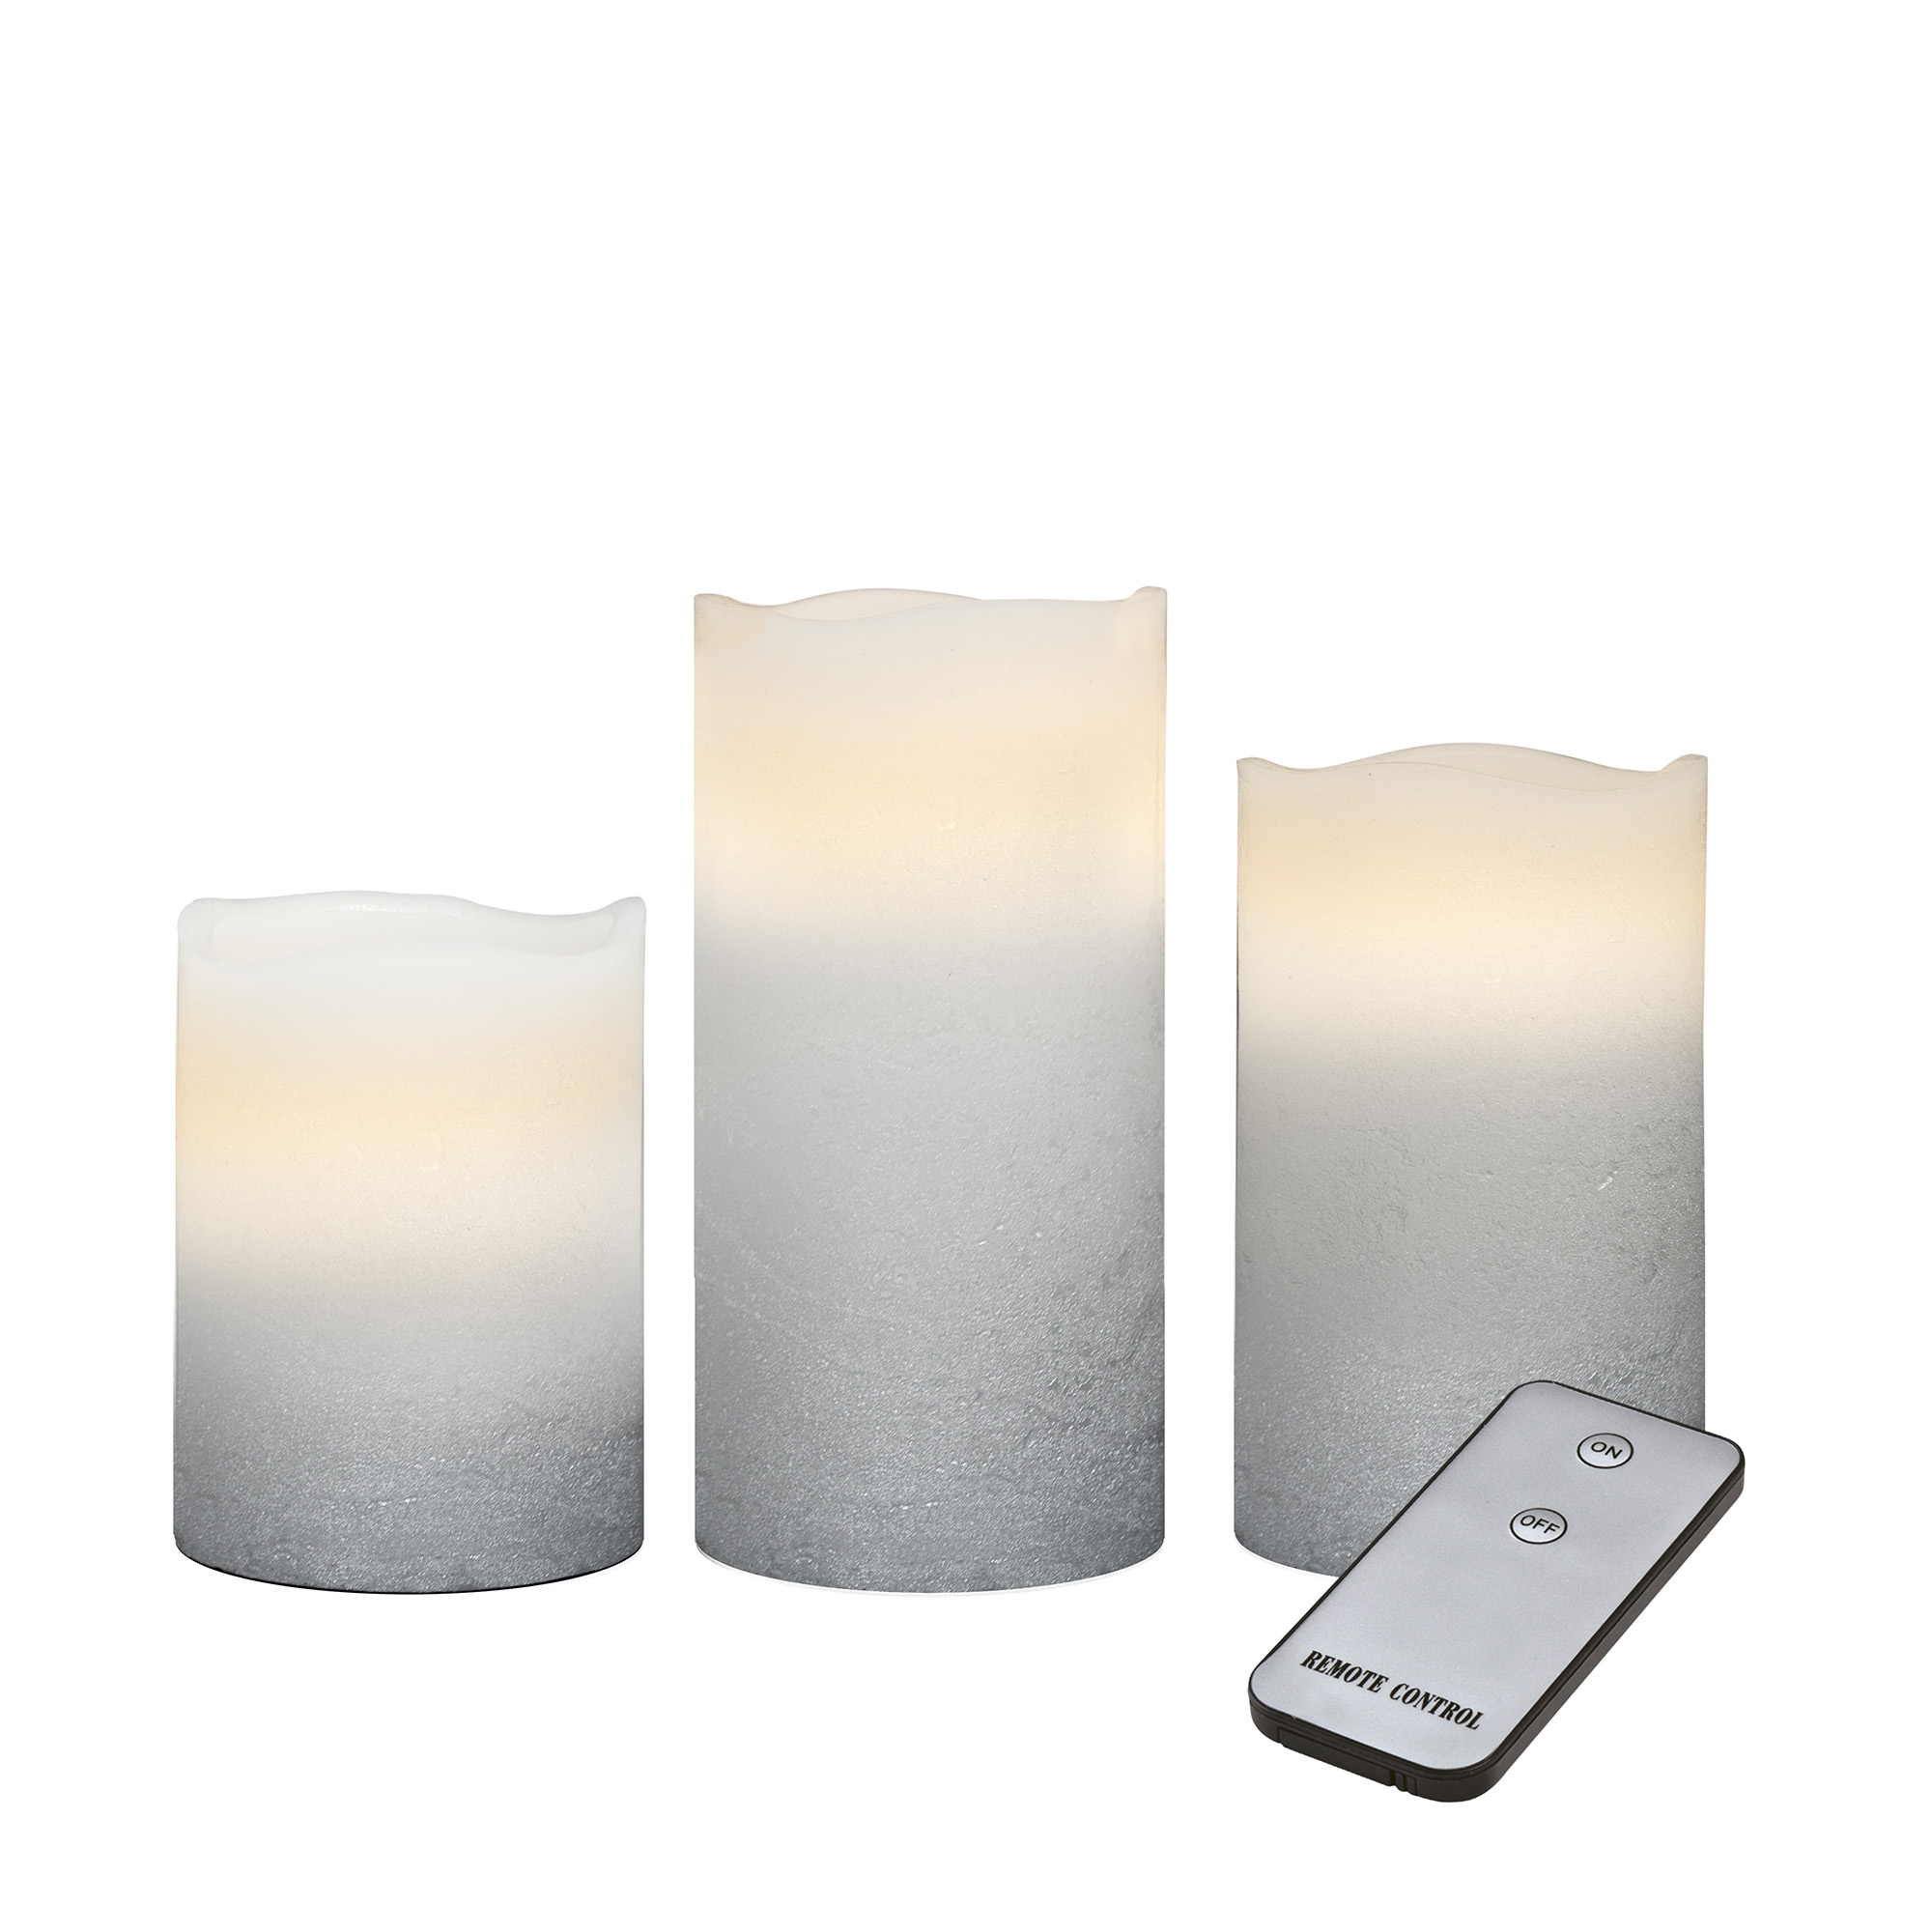 X4-LIFE LED Kerzen 3er-Set mit Fernbedienung, LED Echtwachskerzen, inkl. Batterien, warmweiße täuschend echt flackernde Kerzenflamme, Kerzen 10cm 13cm 15cm hoch, Durchmesser 8 cm, Silber-Weiß, dekorativ